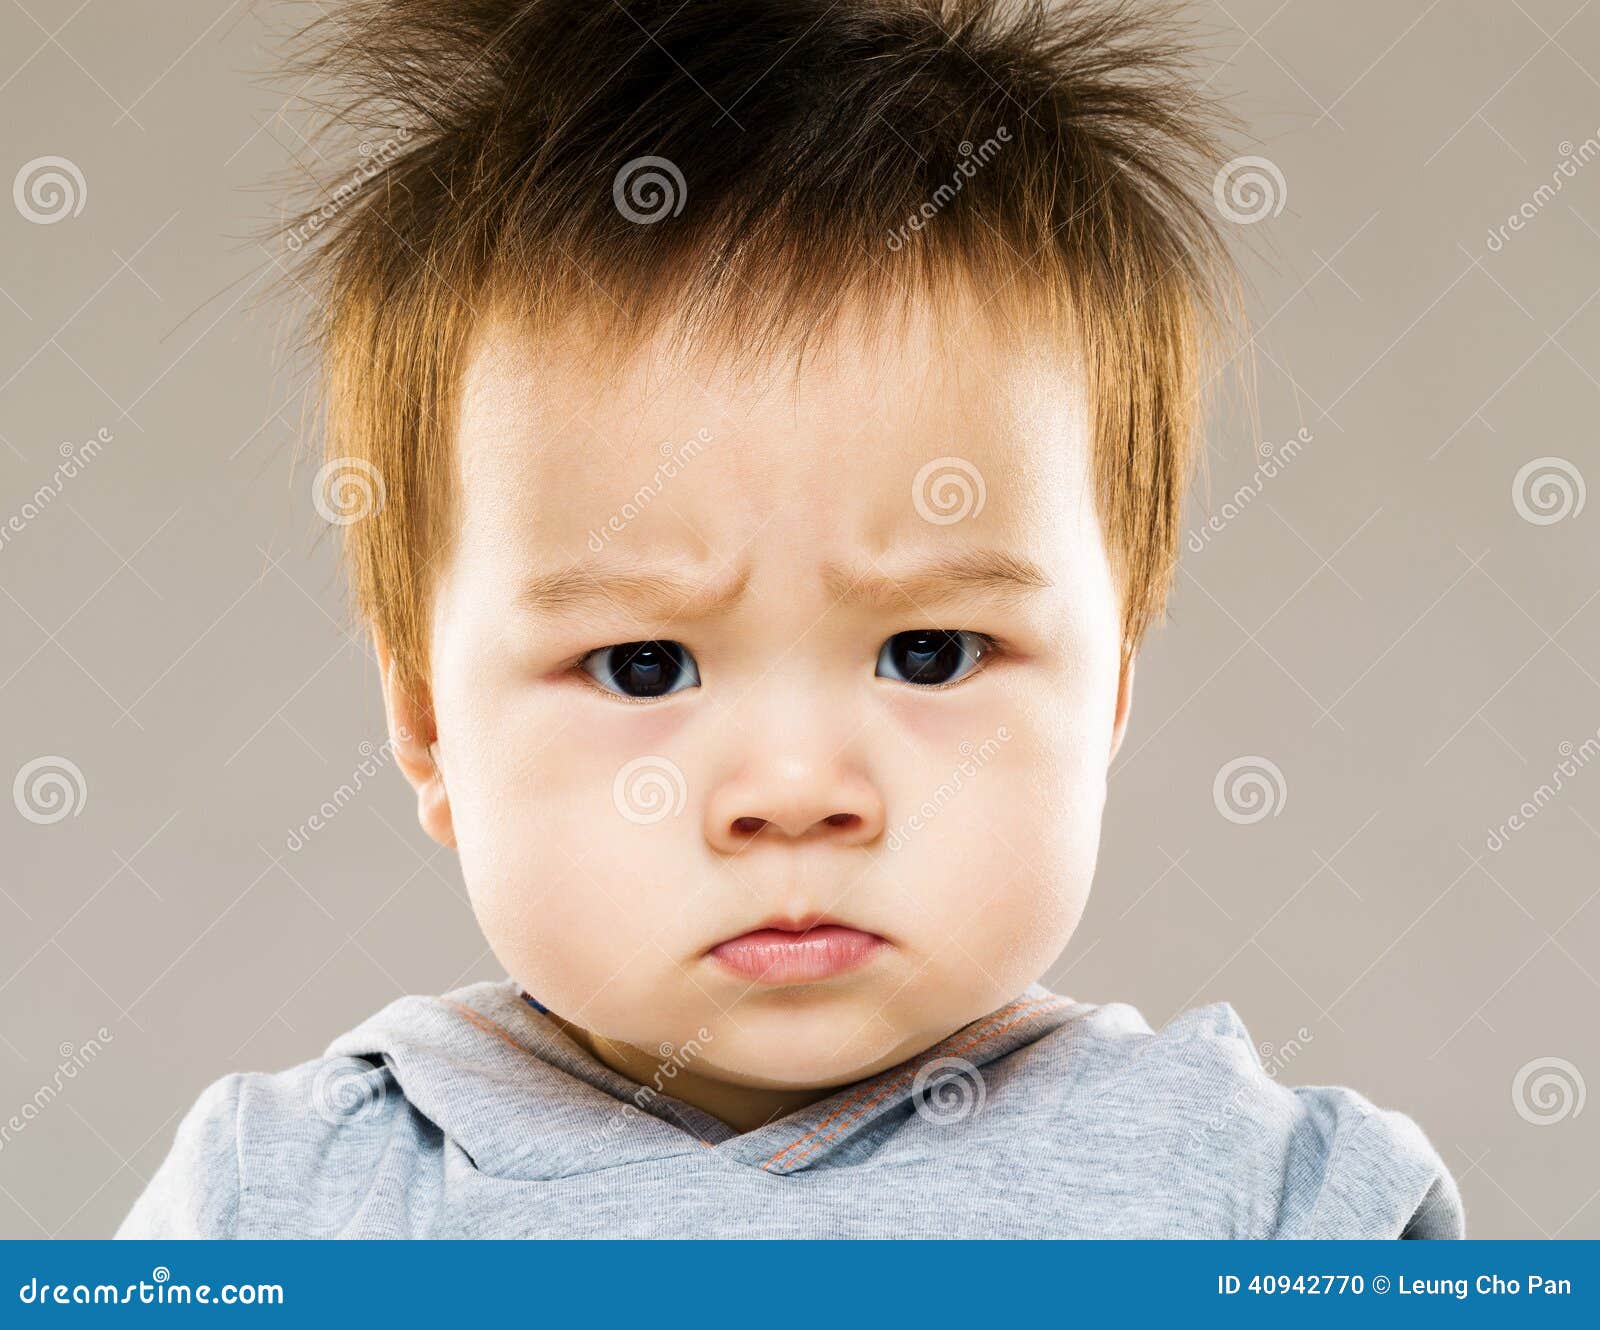 Serious Asia Baby Boy Eyebrow Frown Stock Photo - Image ...